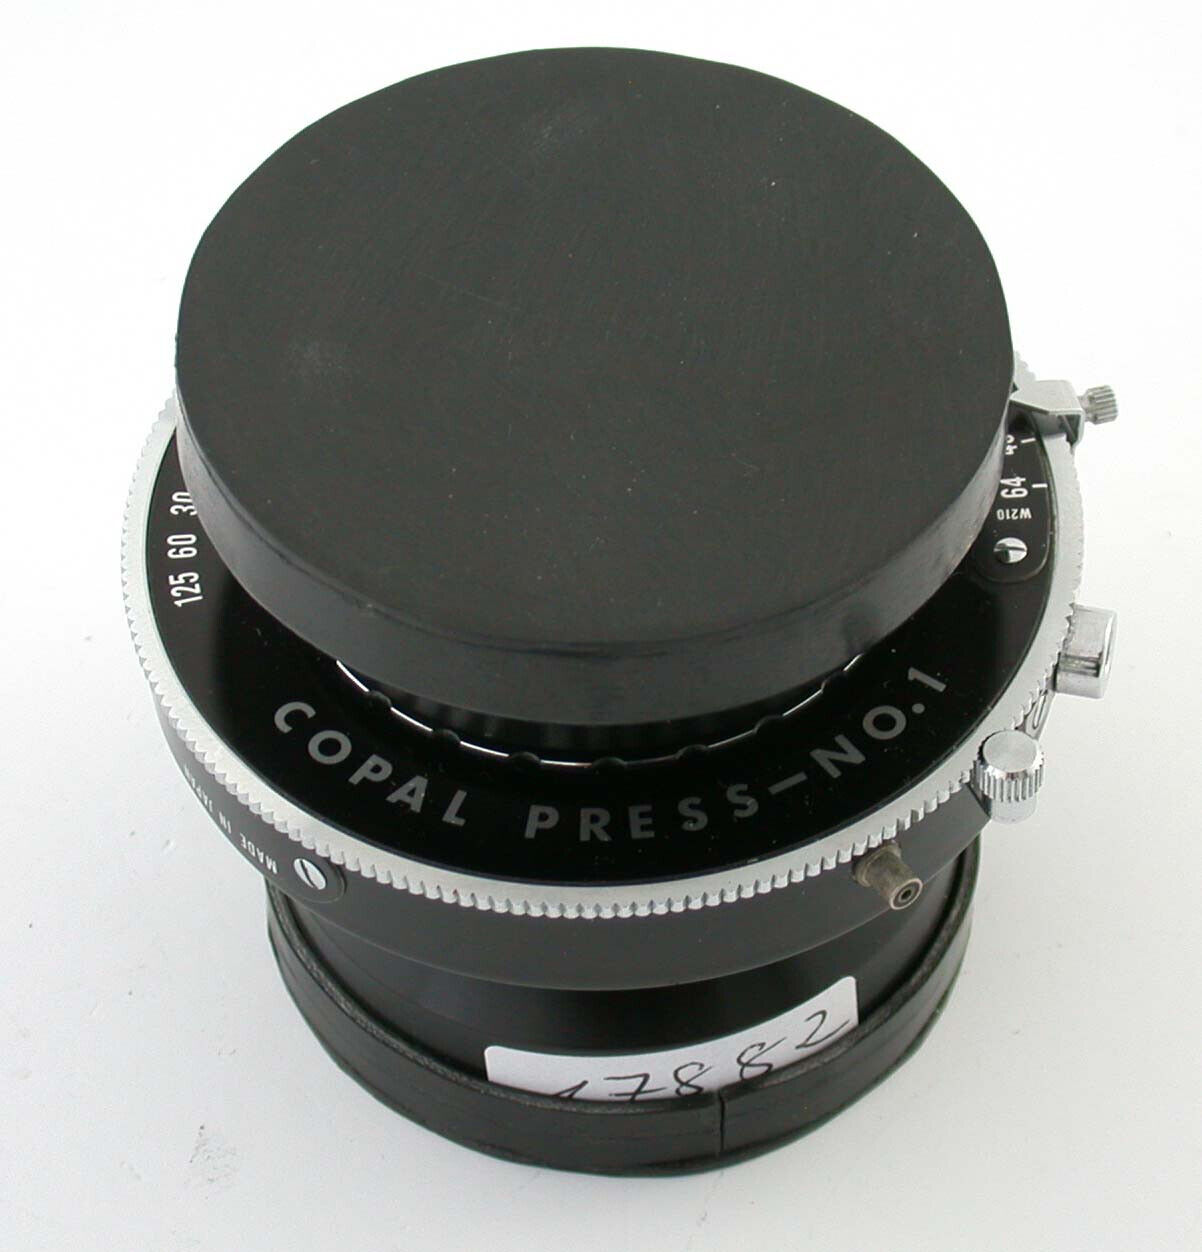 3115 APO Symmar 300mm F5.6 MC アポジンマー - カメラ